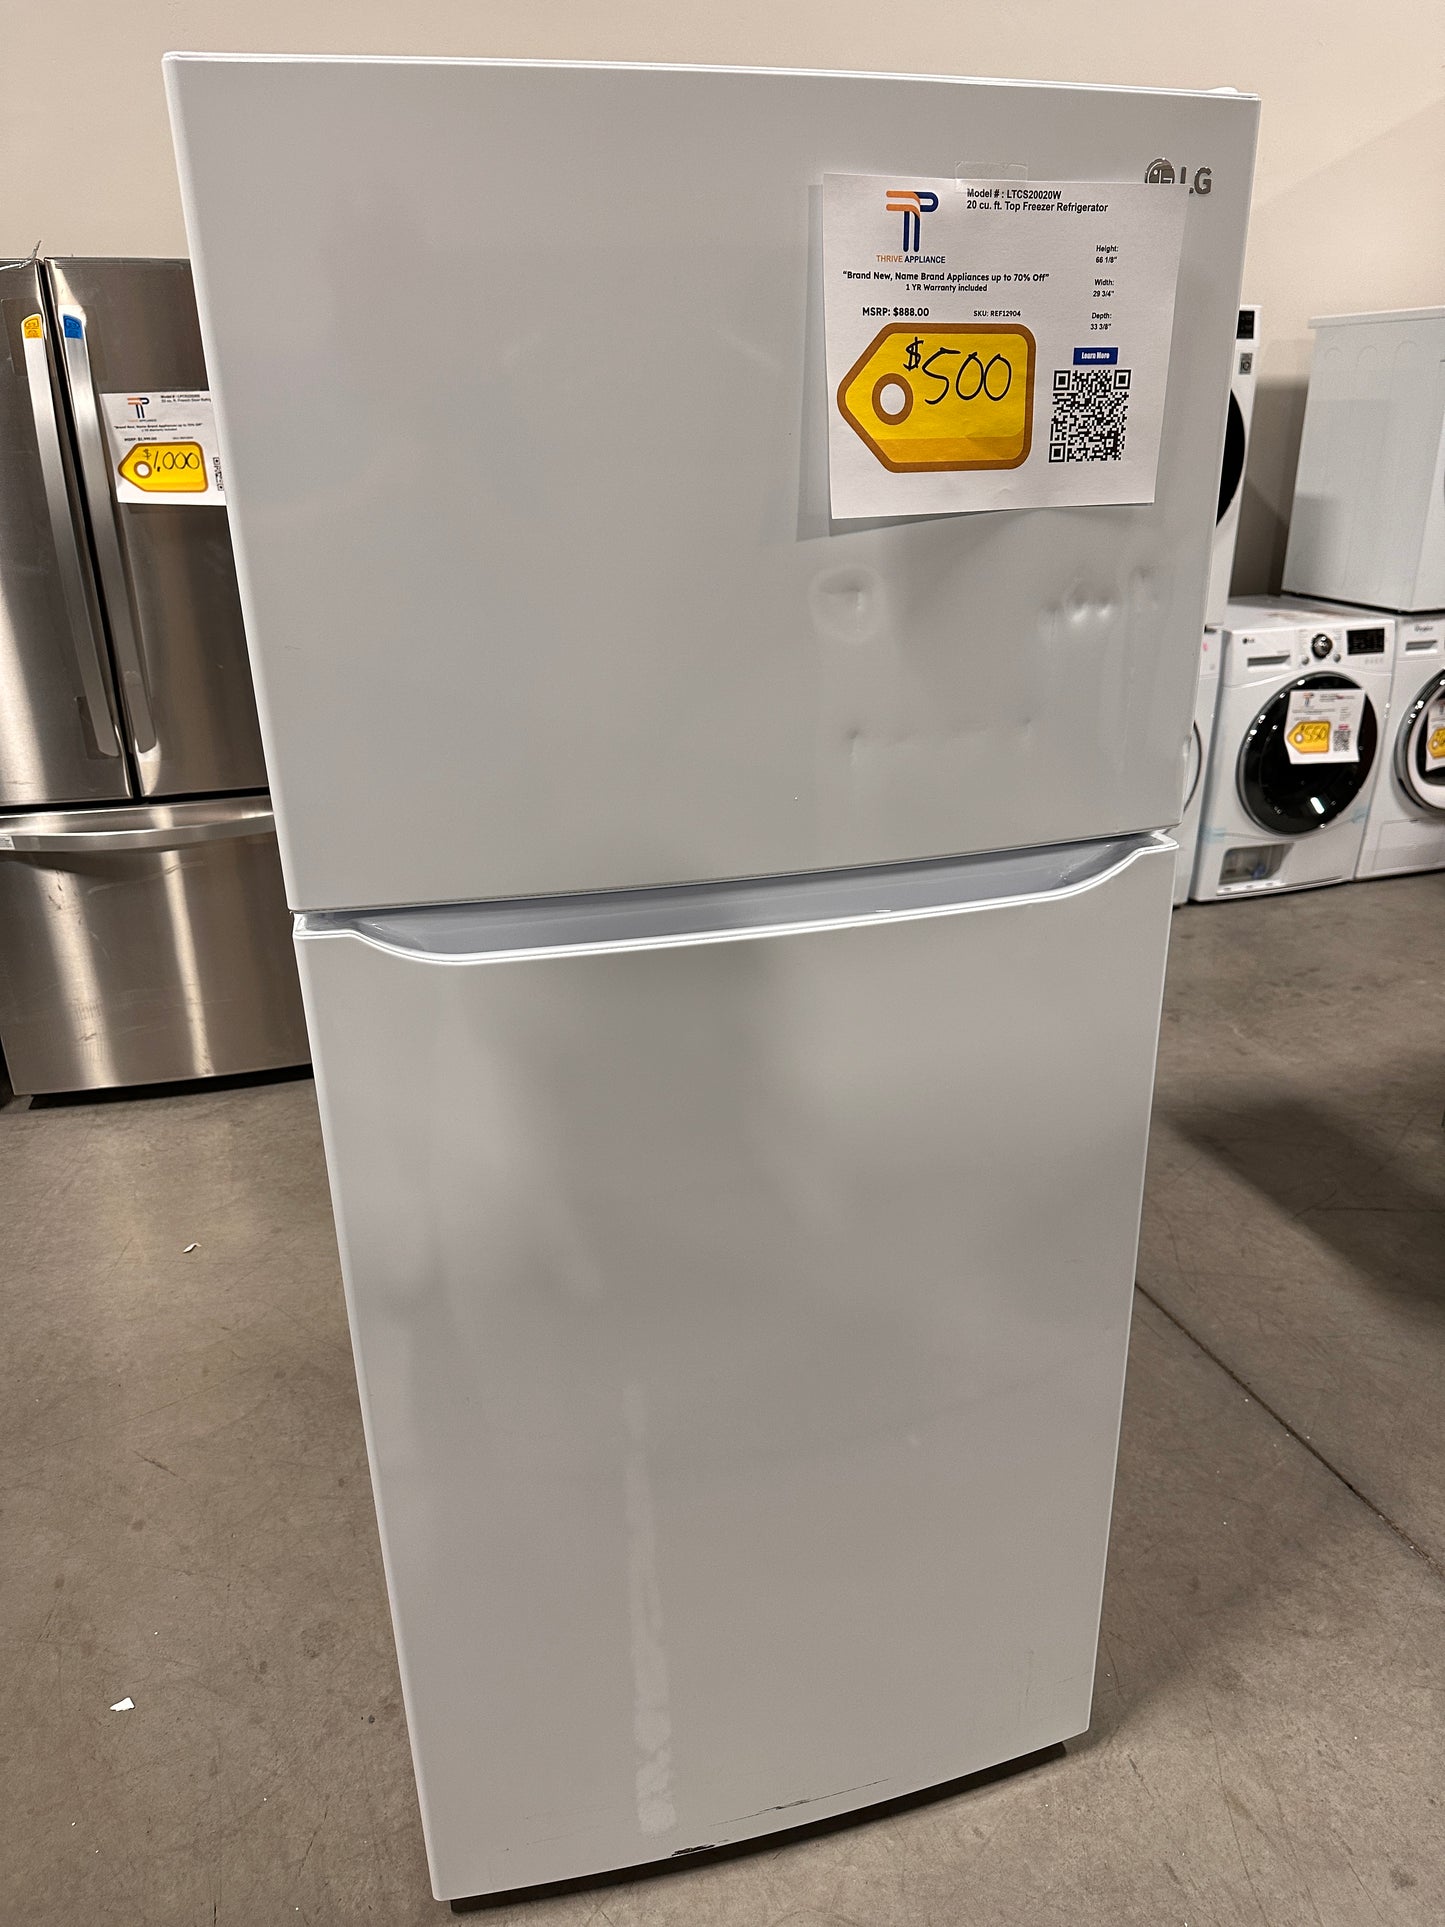 NEW LG - 20.2 Cu. Ft. Top-Freezer Refrigerator - White  Model:LTCS20020W  REF12904